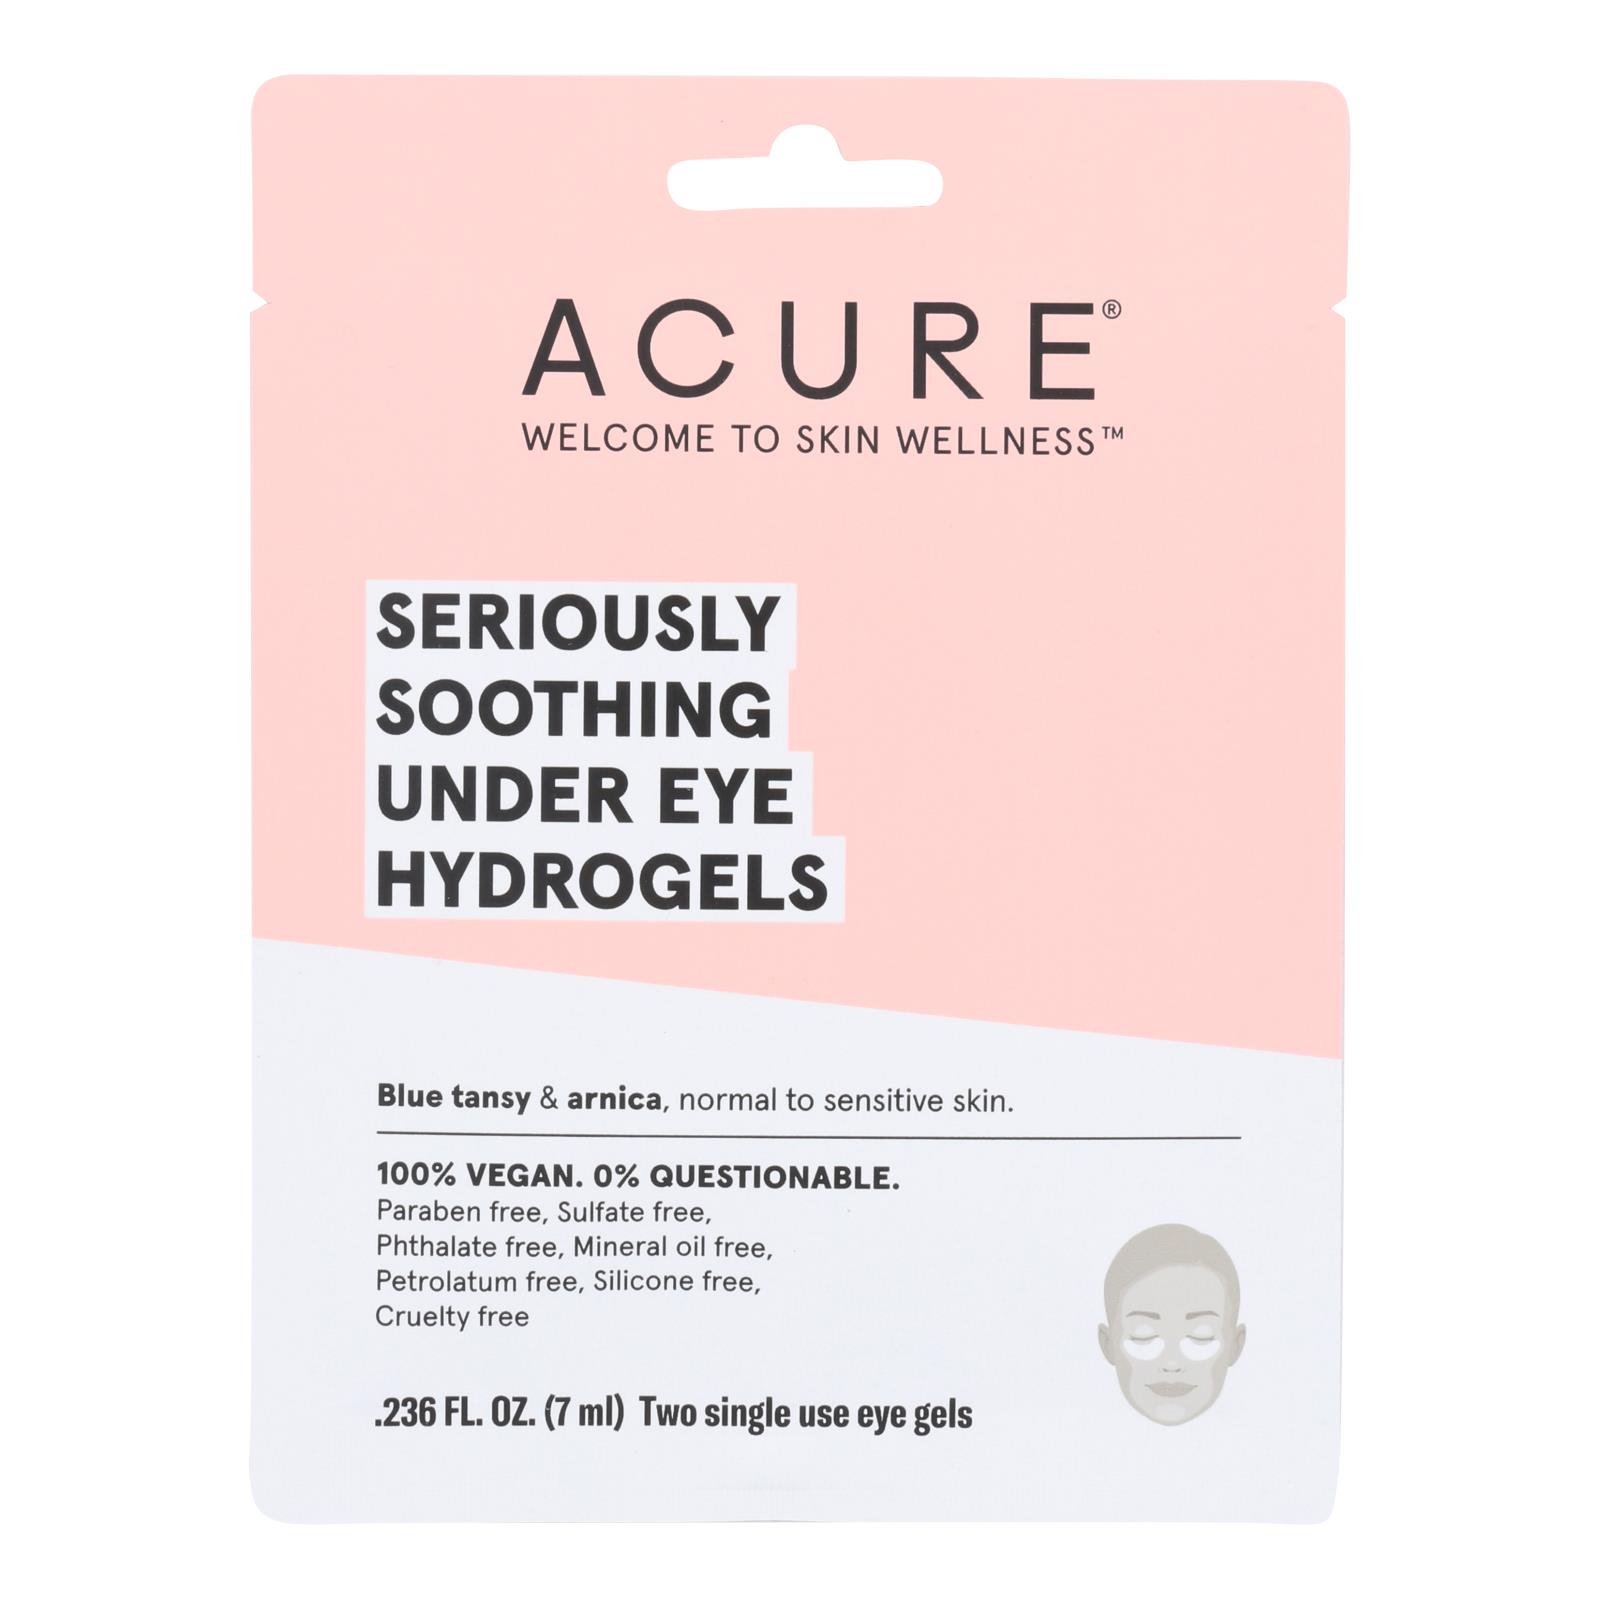 Acure - Seriously Soothing Under Eye Hydrogels - 12개 묶음상품 - 0.236 fl oz.